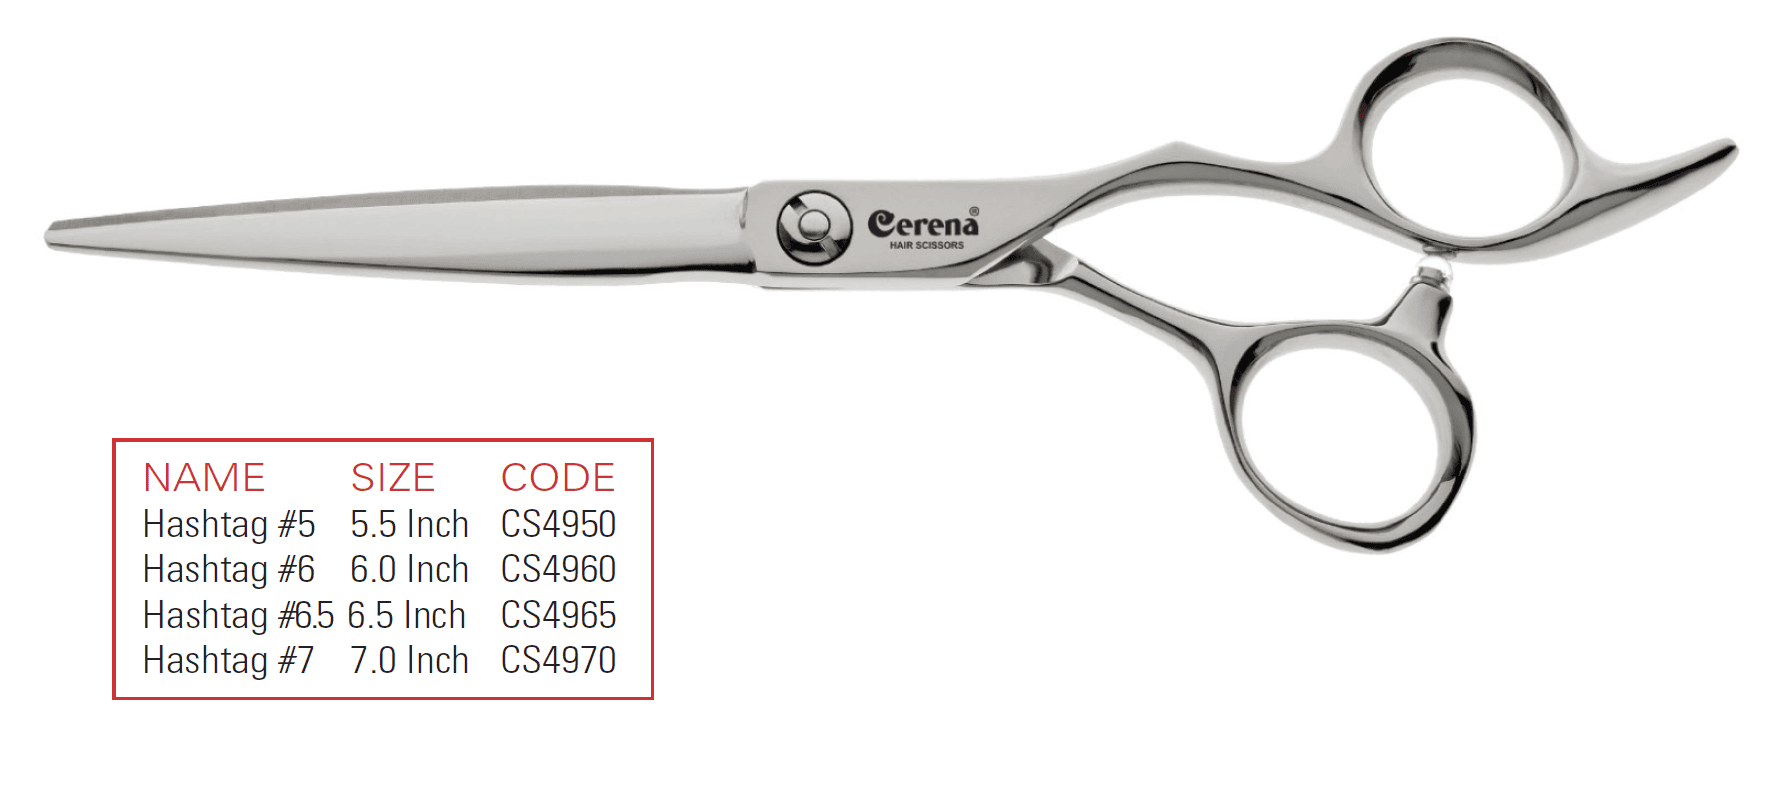 Cerena Hashtag No7 - 4970 - 7.0 Inch Scissor